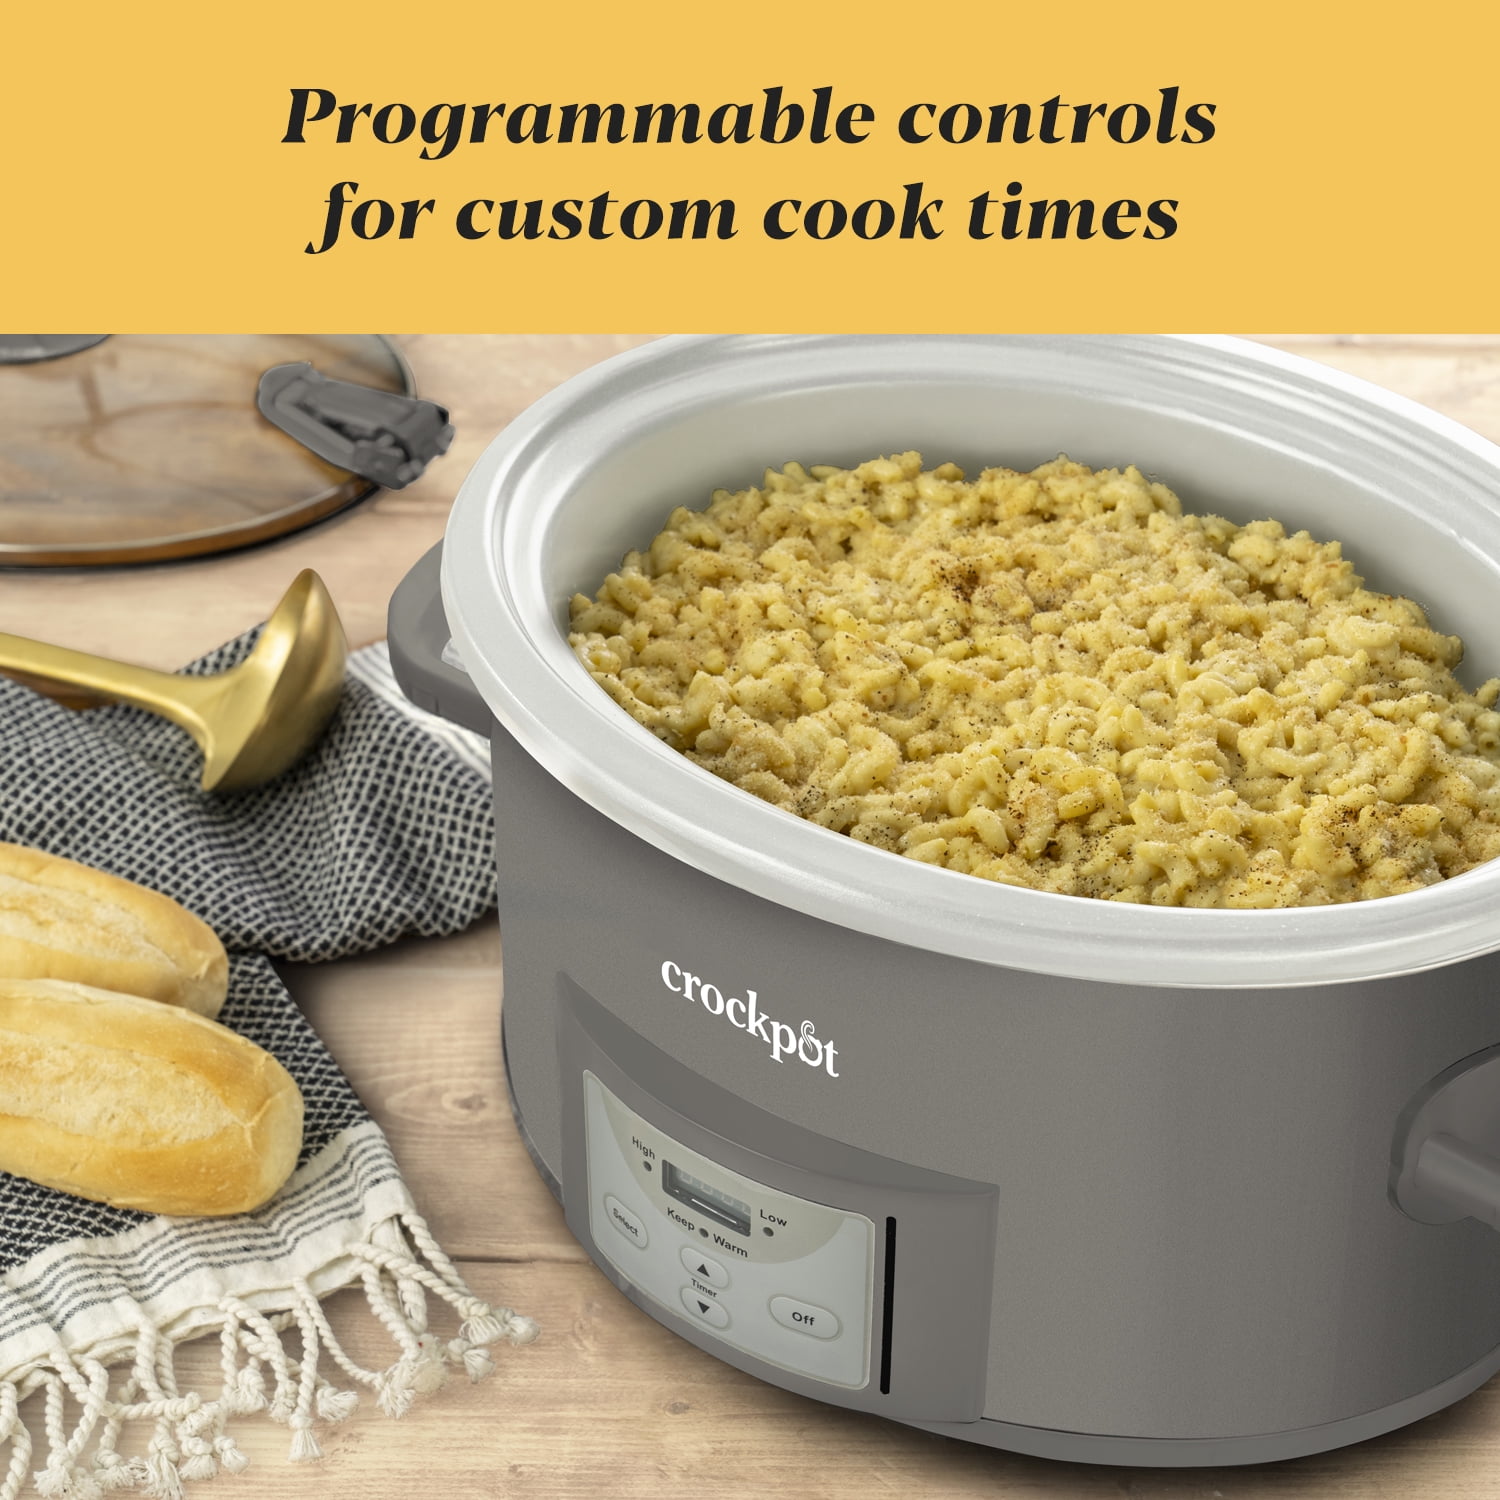 Crock-pot 7.0-Quart Cook & Carry Programmable Slow Cooker